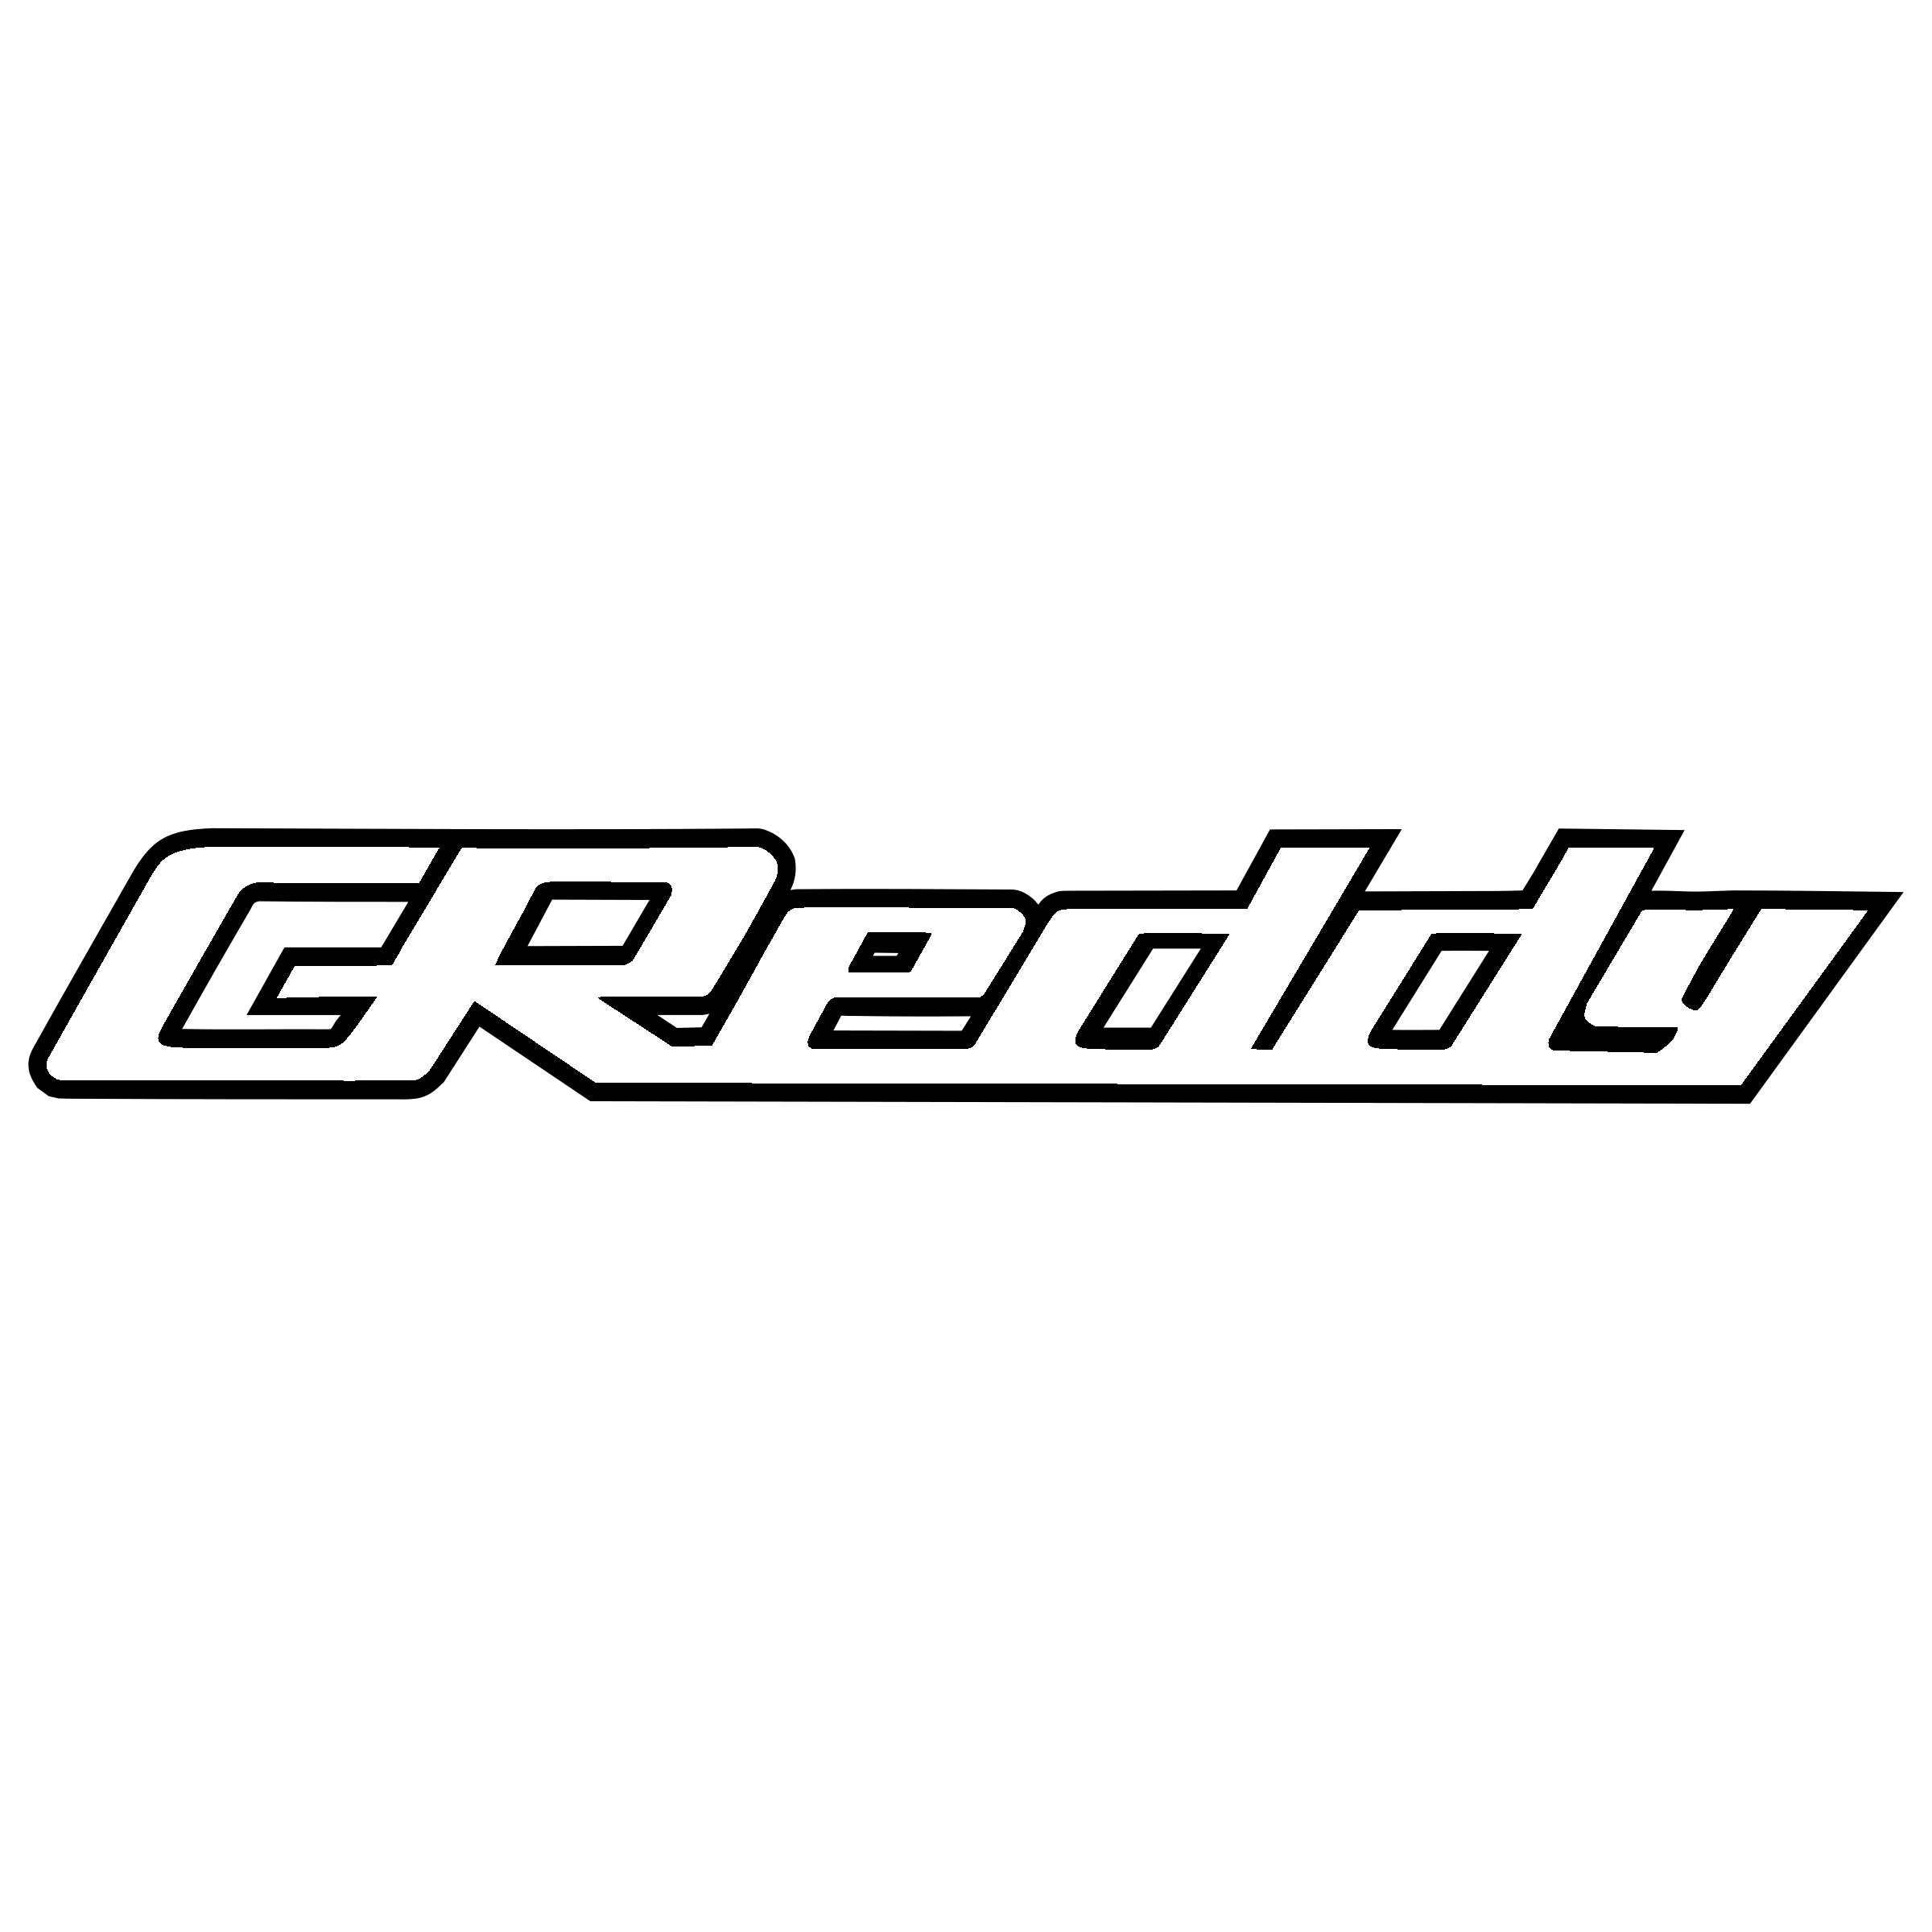 Greddy Logo - GReddy Logo PNG Transparent & SVG Vector